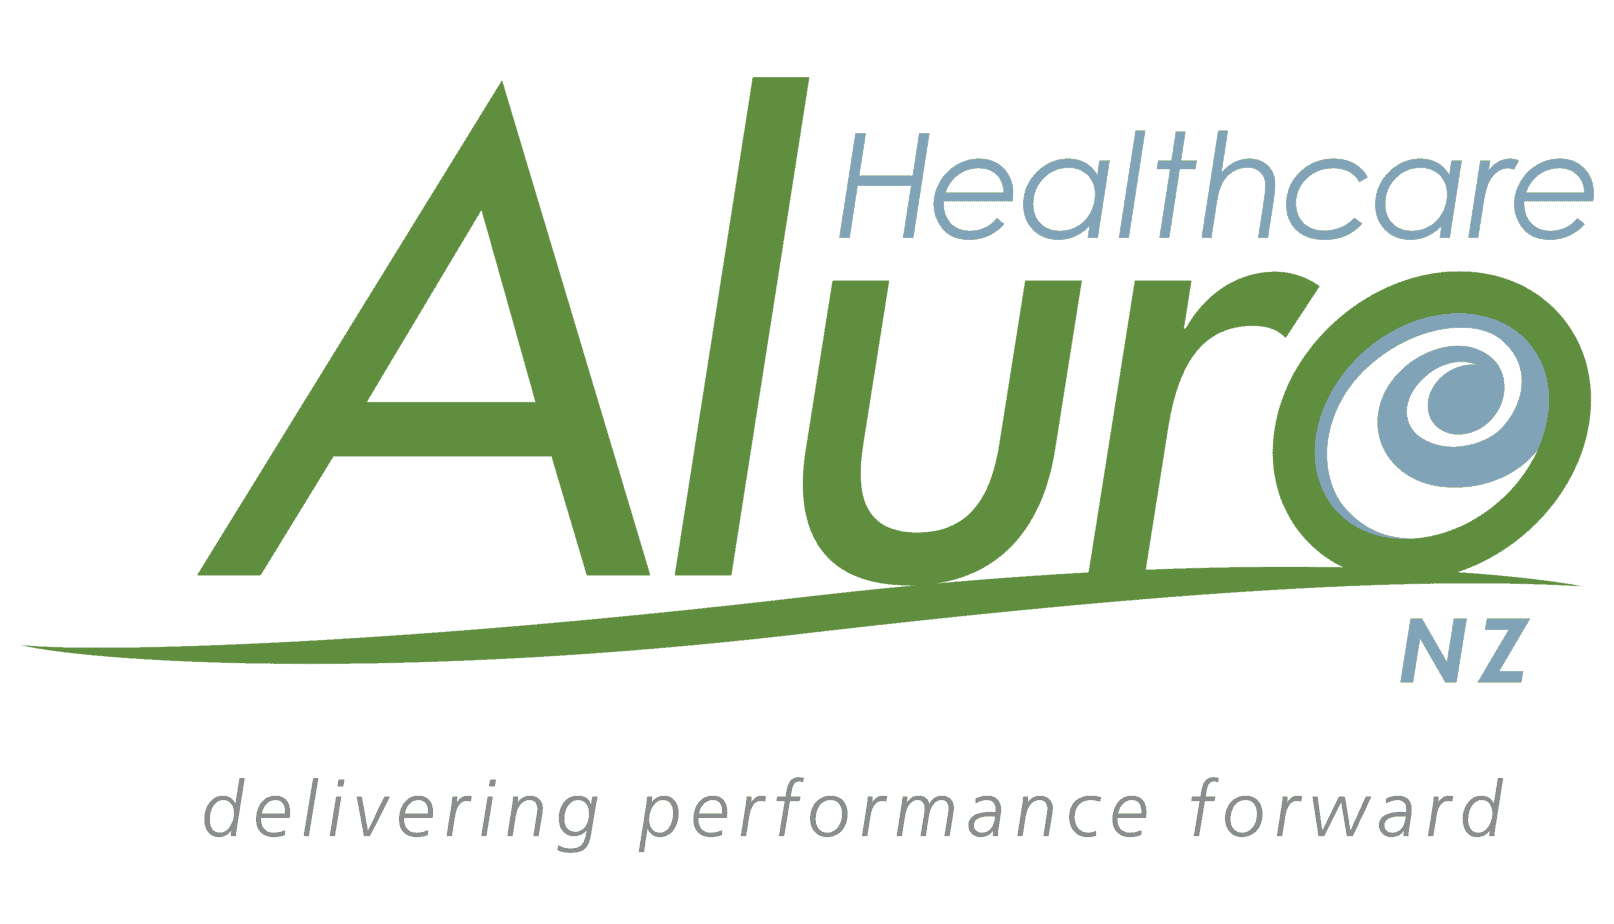 Aluro Healthcare NZ